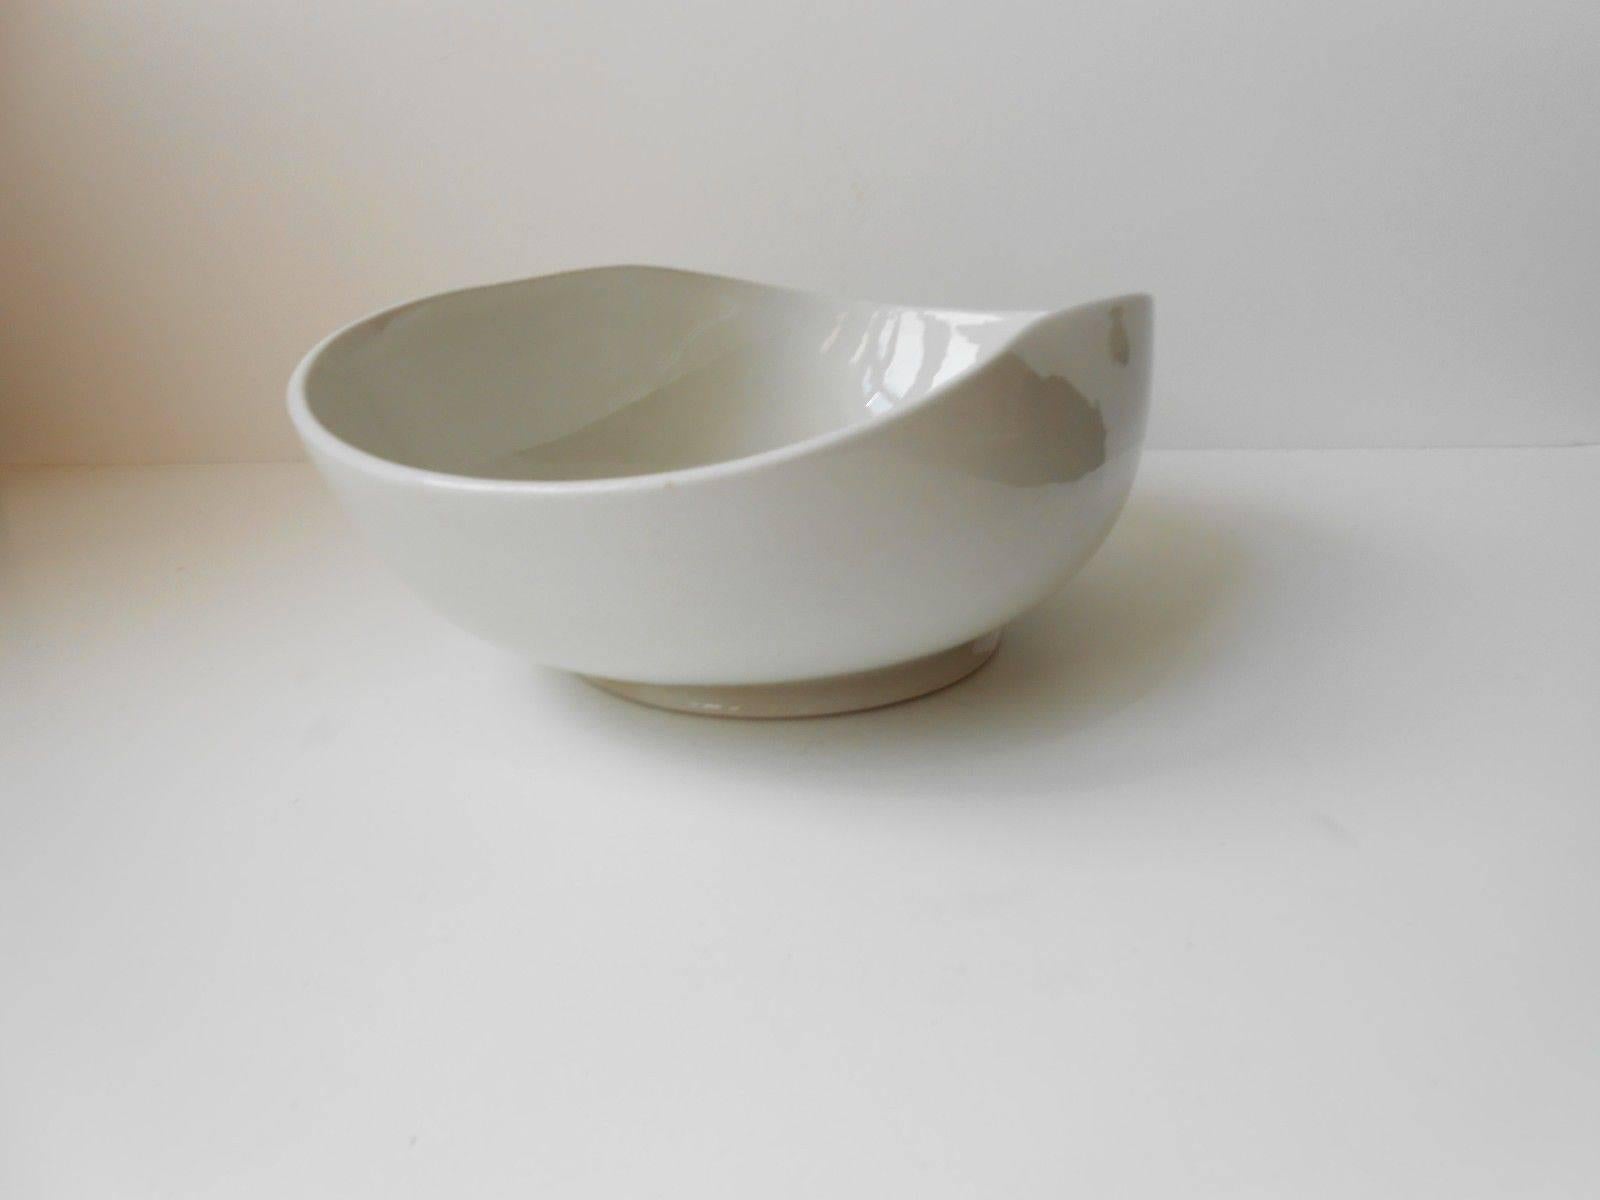 Glazed Biomorphic 1930s White Earthenware Bowl by Wilhelm Kåge for Gustavsberg, Sweden